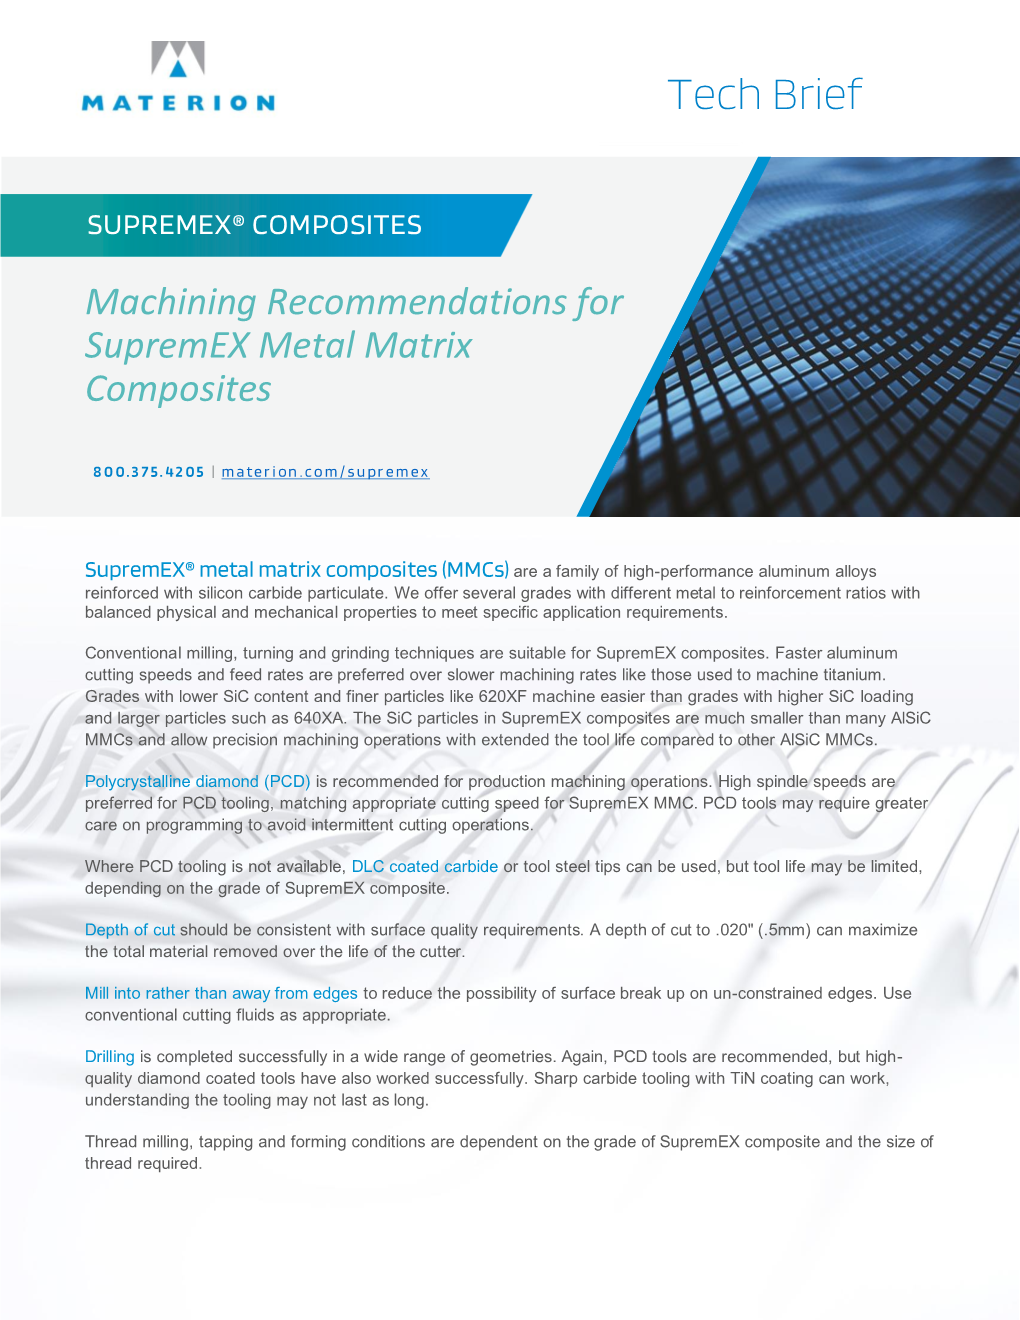 Machining Recommendations for Supremex Metal Matrix Composites